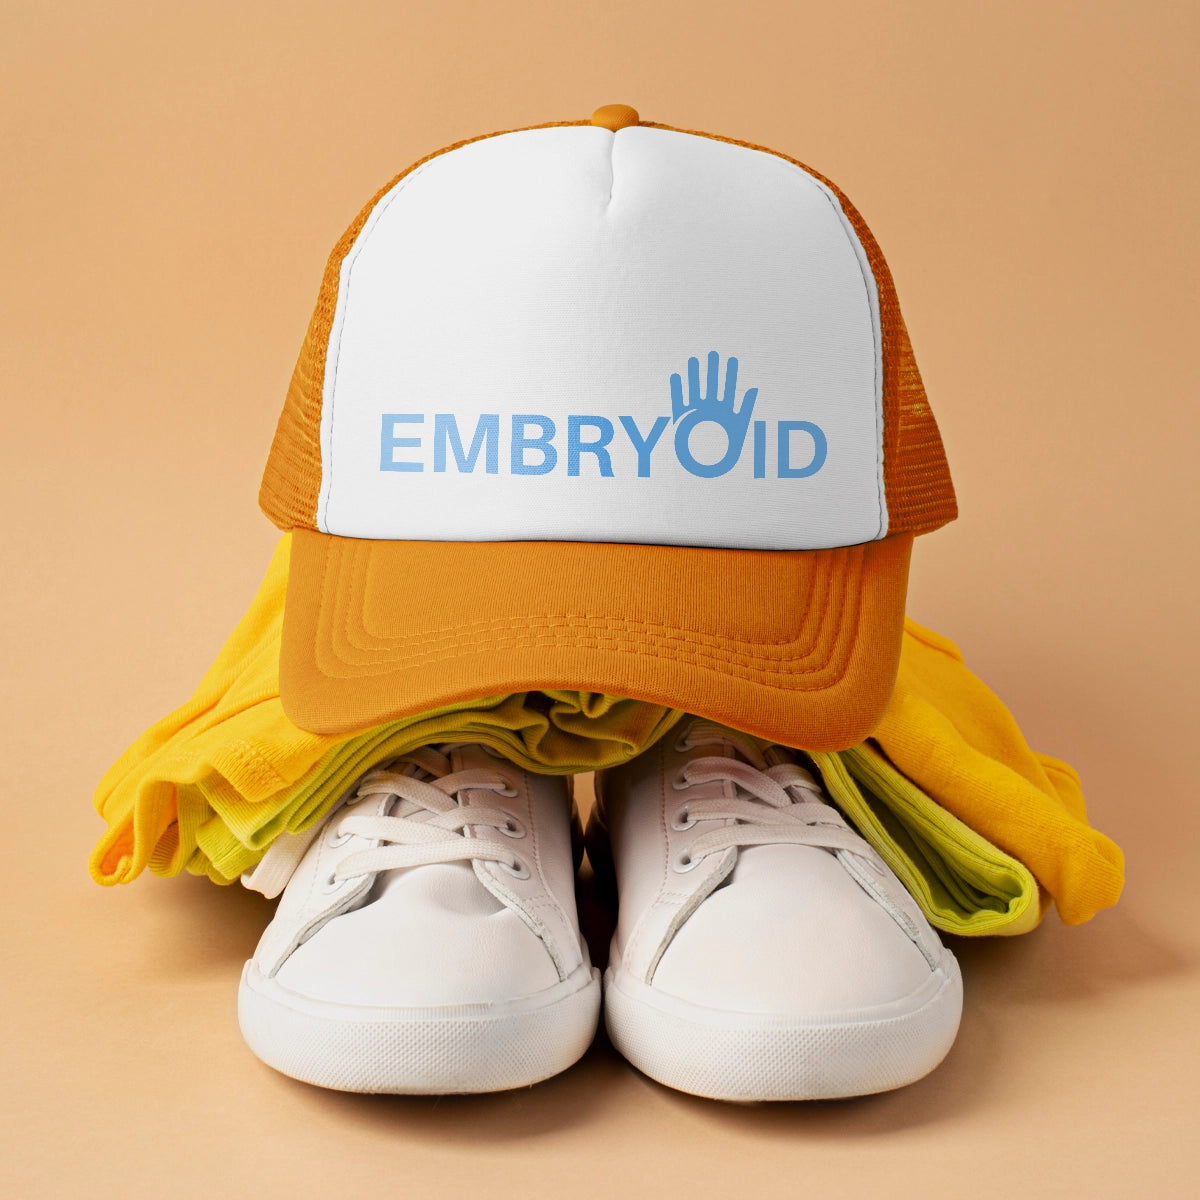 Embryoid.com